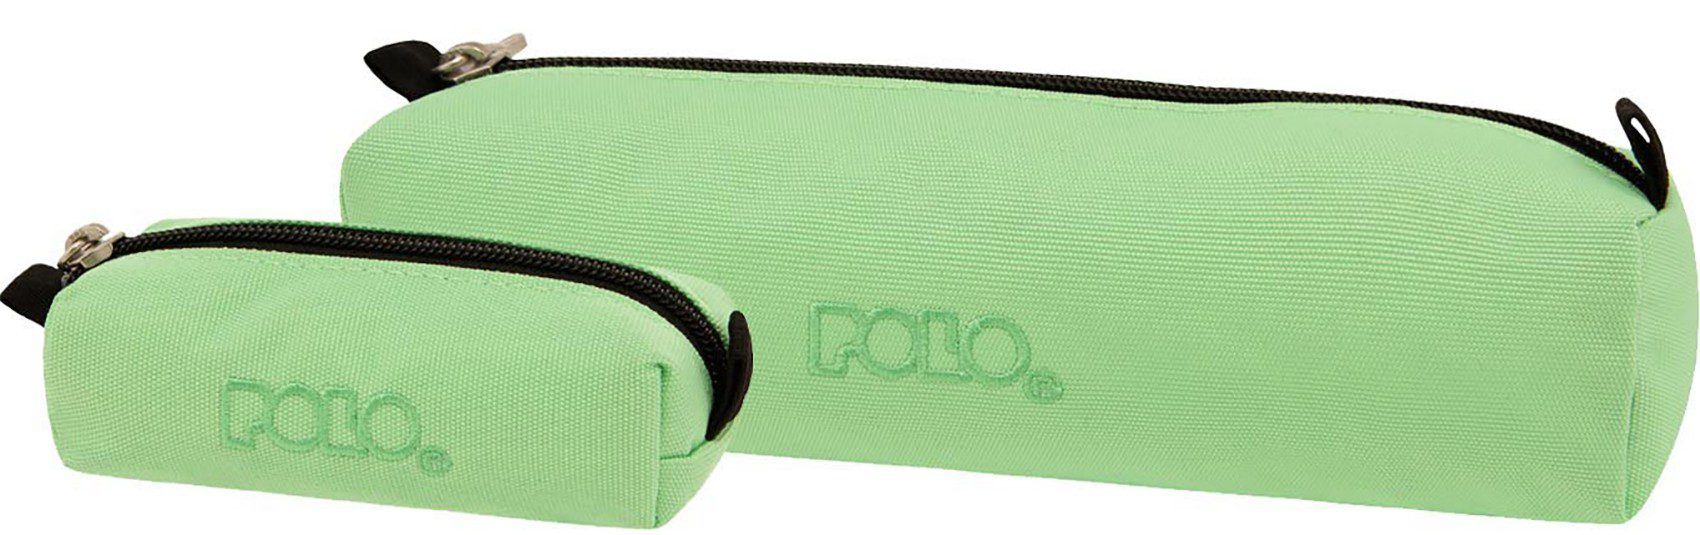 Polo Κασετινα Wallet Cord Μεντα 2023